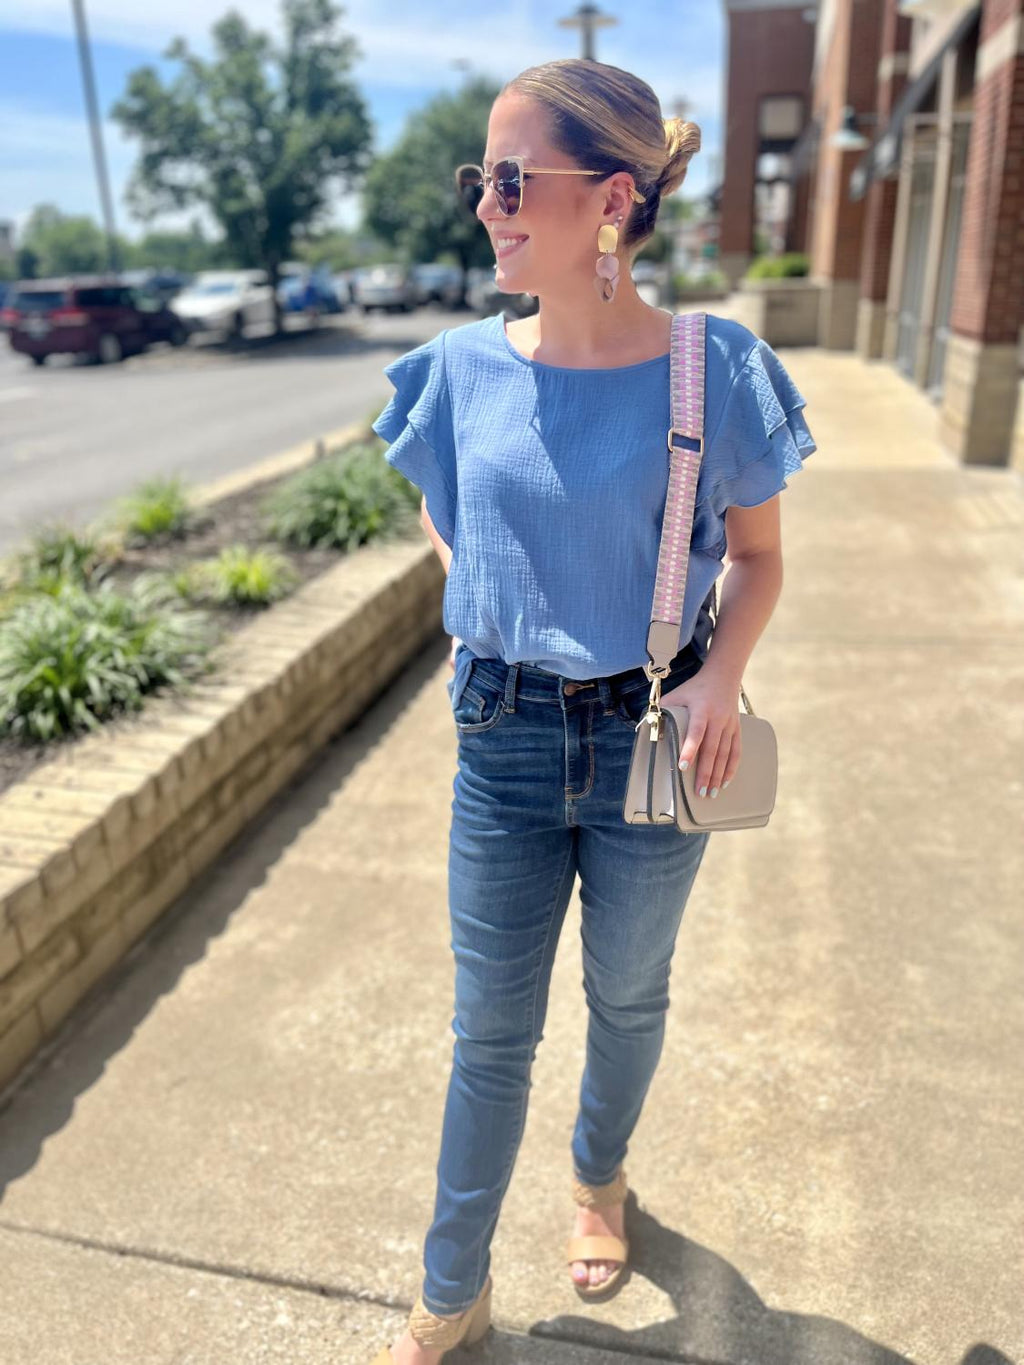 Louisville Girl Womens Tee – Darling State of Mind